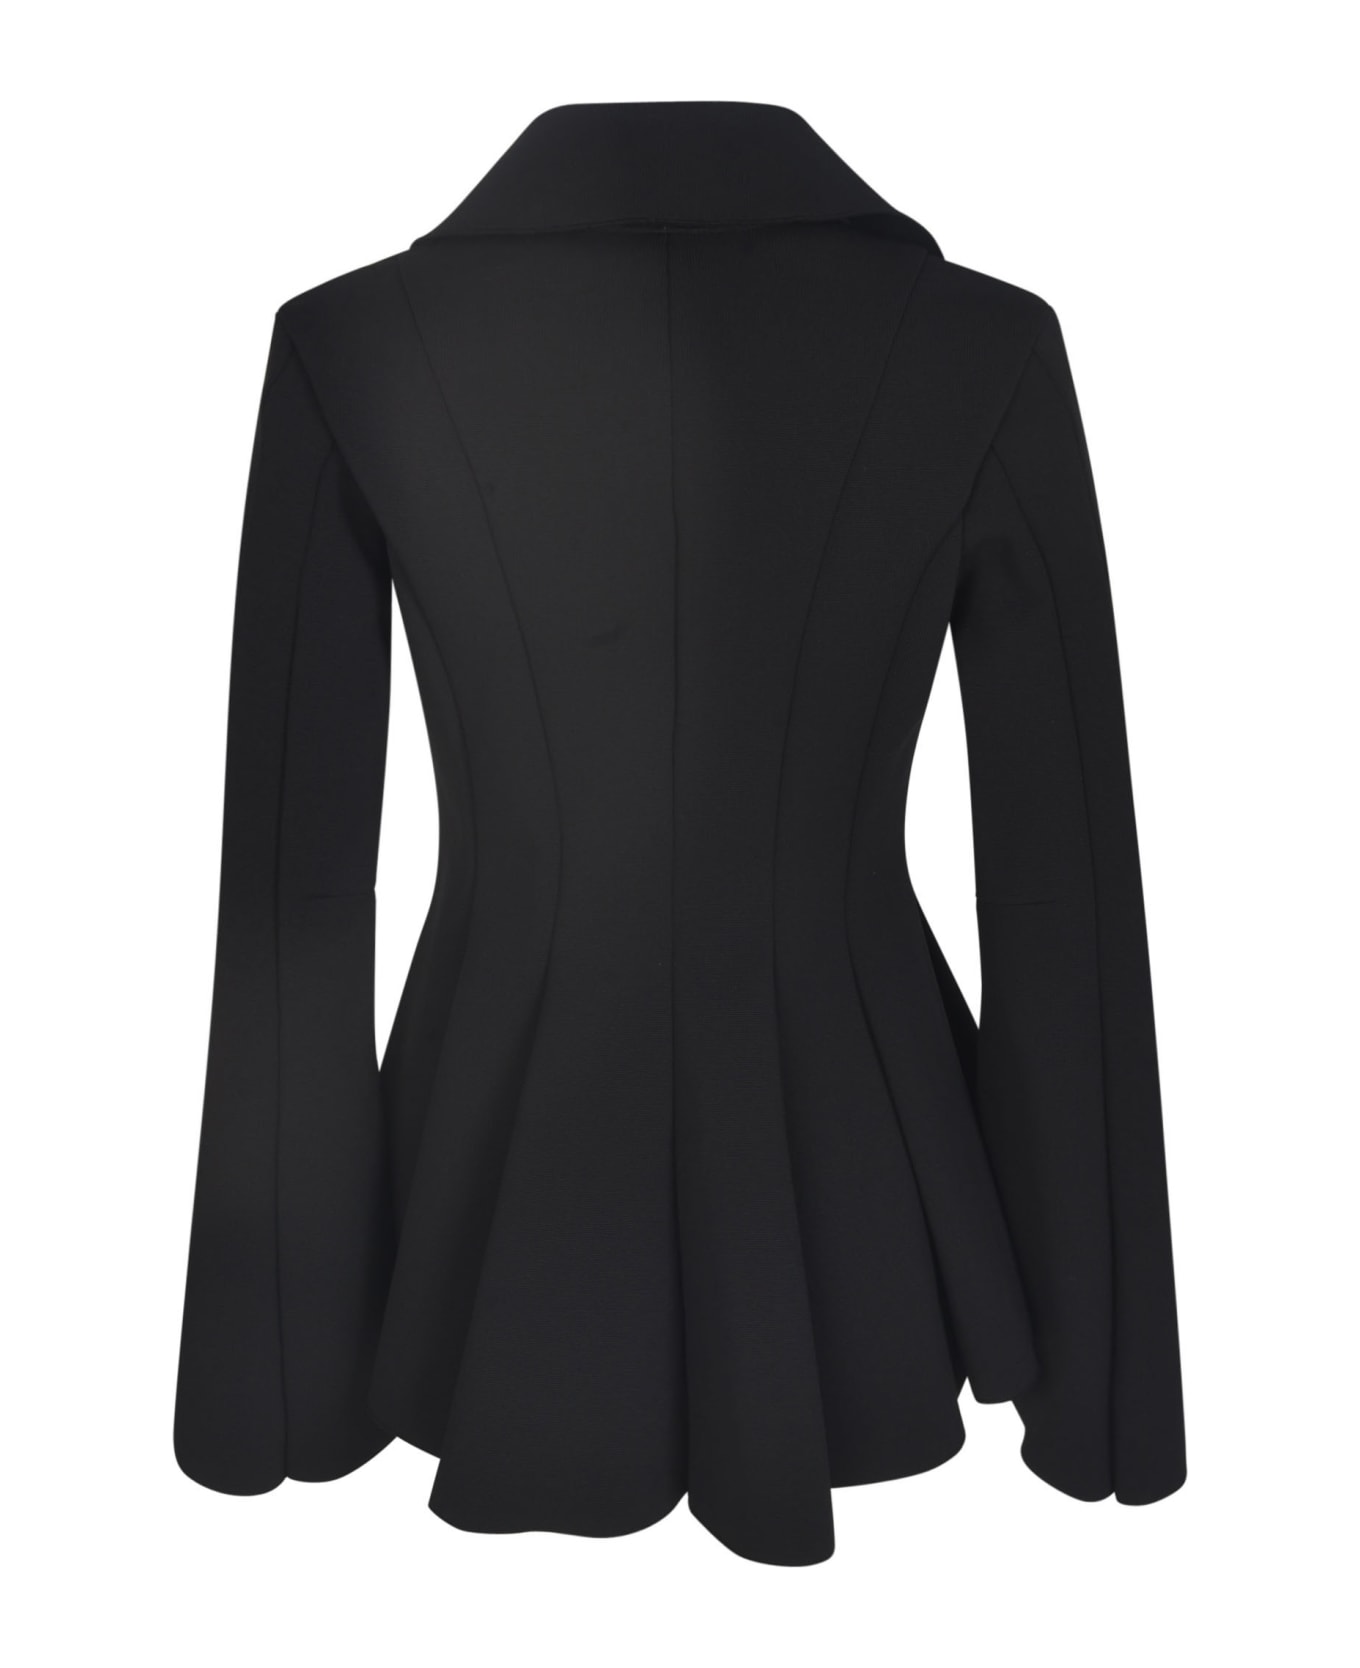 Comme des Garçons Noir Kei Ninomiya Flare Pleated Zipped Jacket - Black